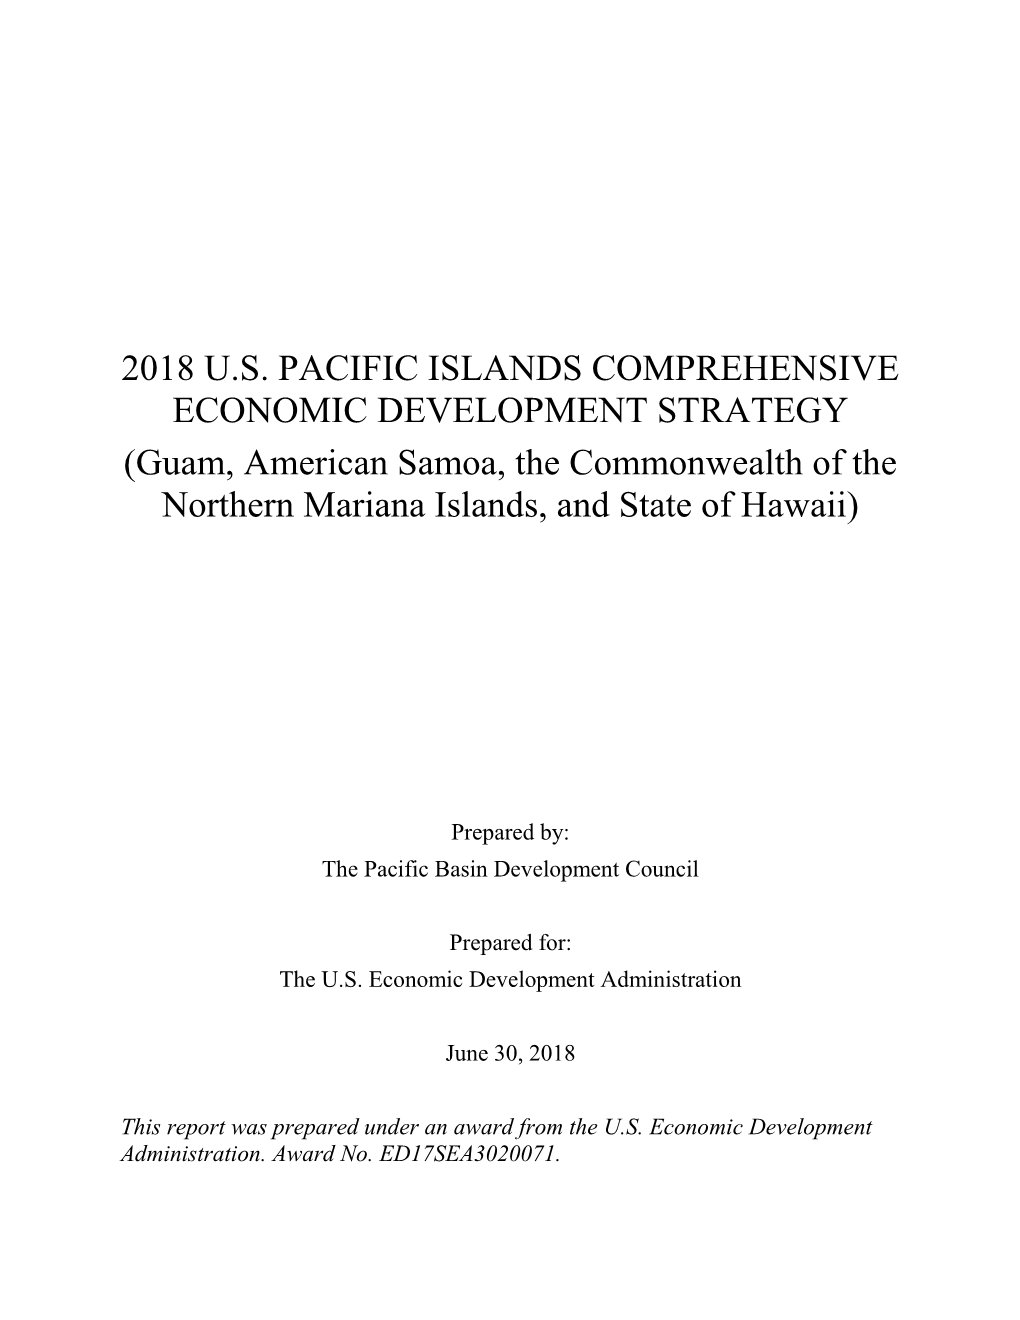 2018 U.S. PACIFIC ISLANDS COMPREHENSIVE ECONOMIC DEVELOPMENT STRATEGY (Guam, American Samoa, the Commonwealth of the Northern Mariana Islands, and State of Hawaii)